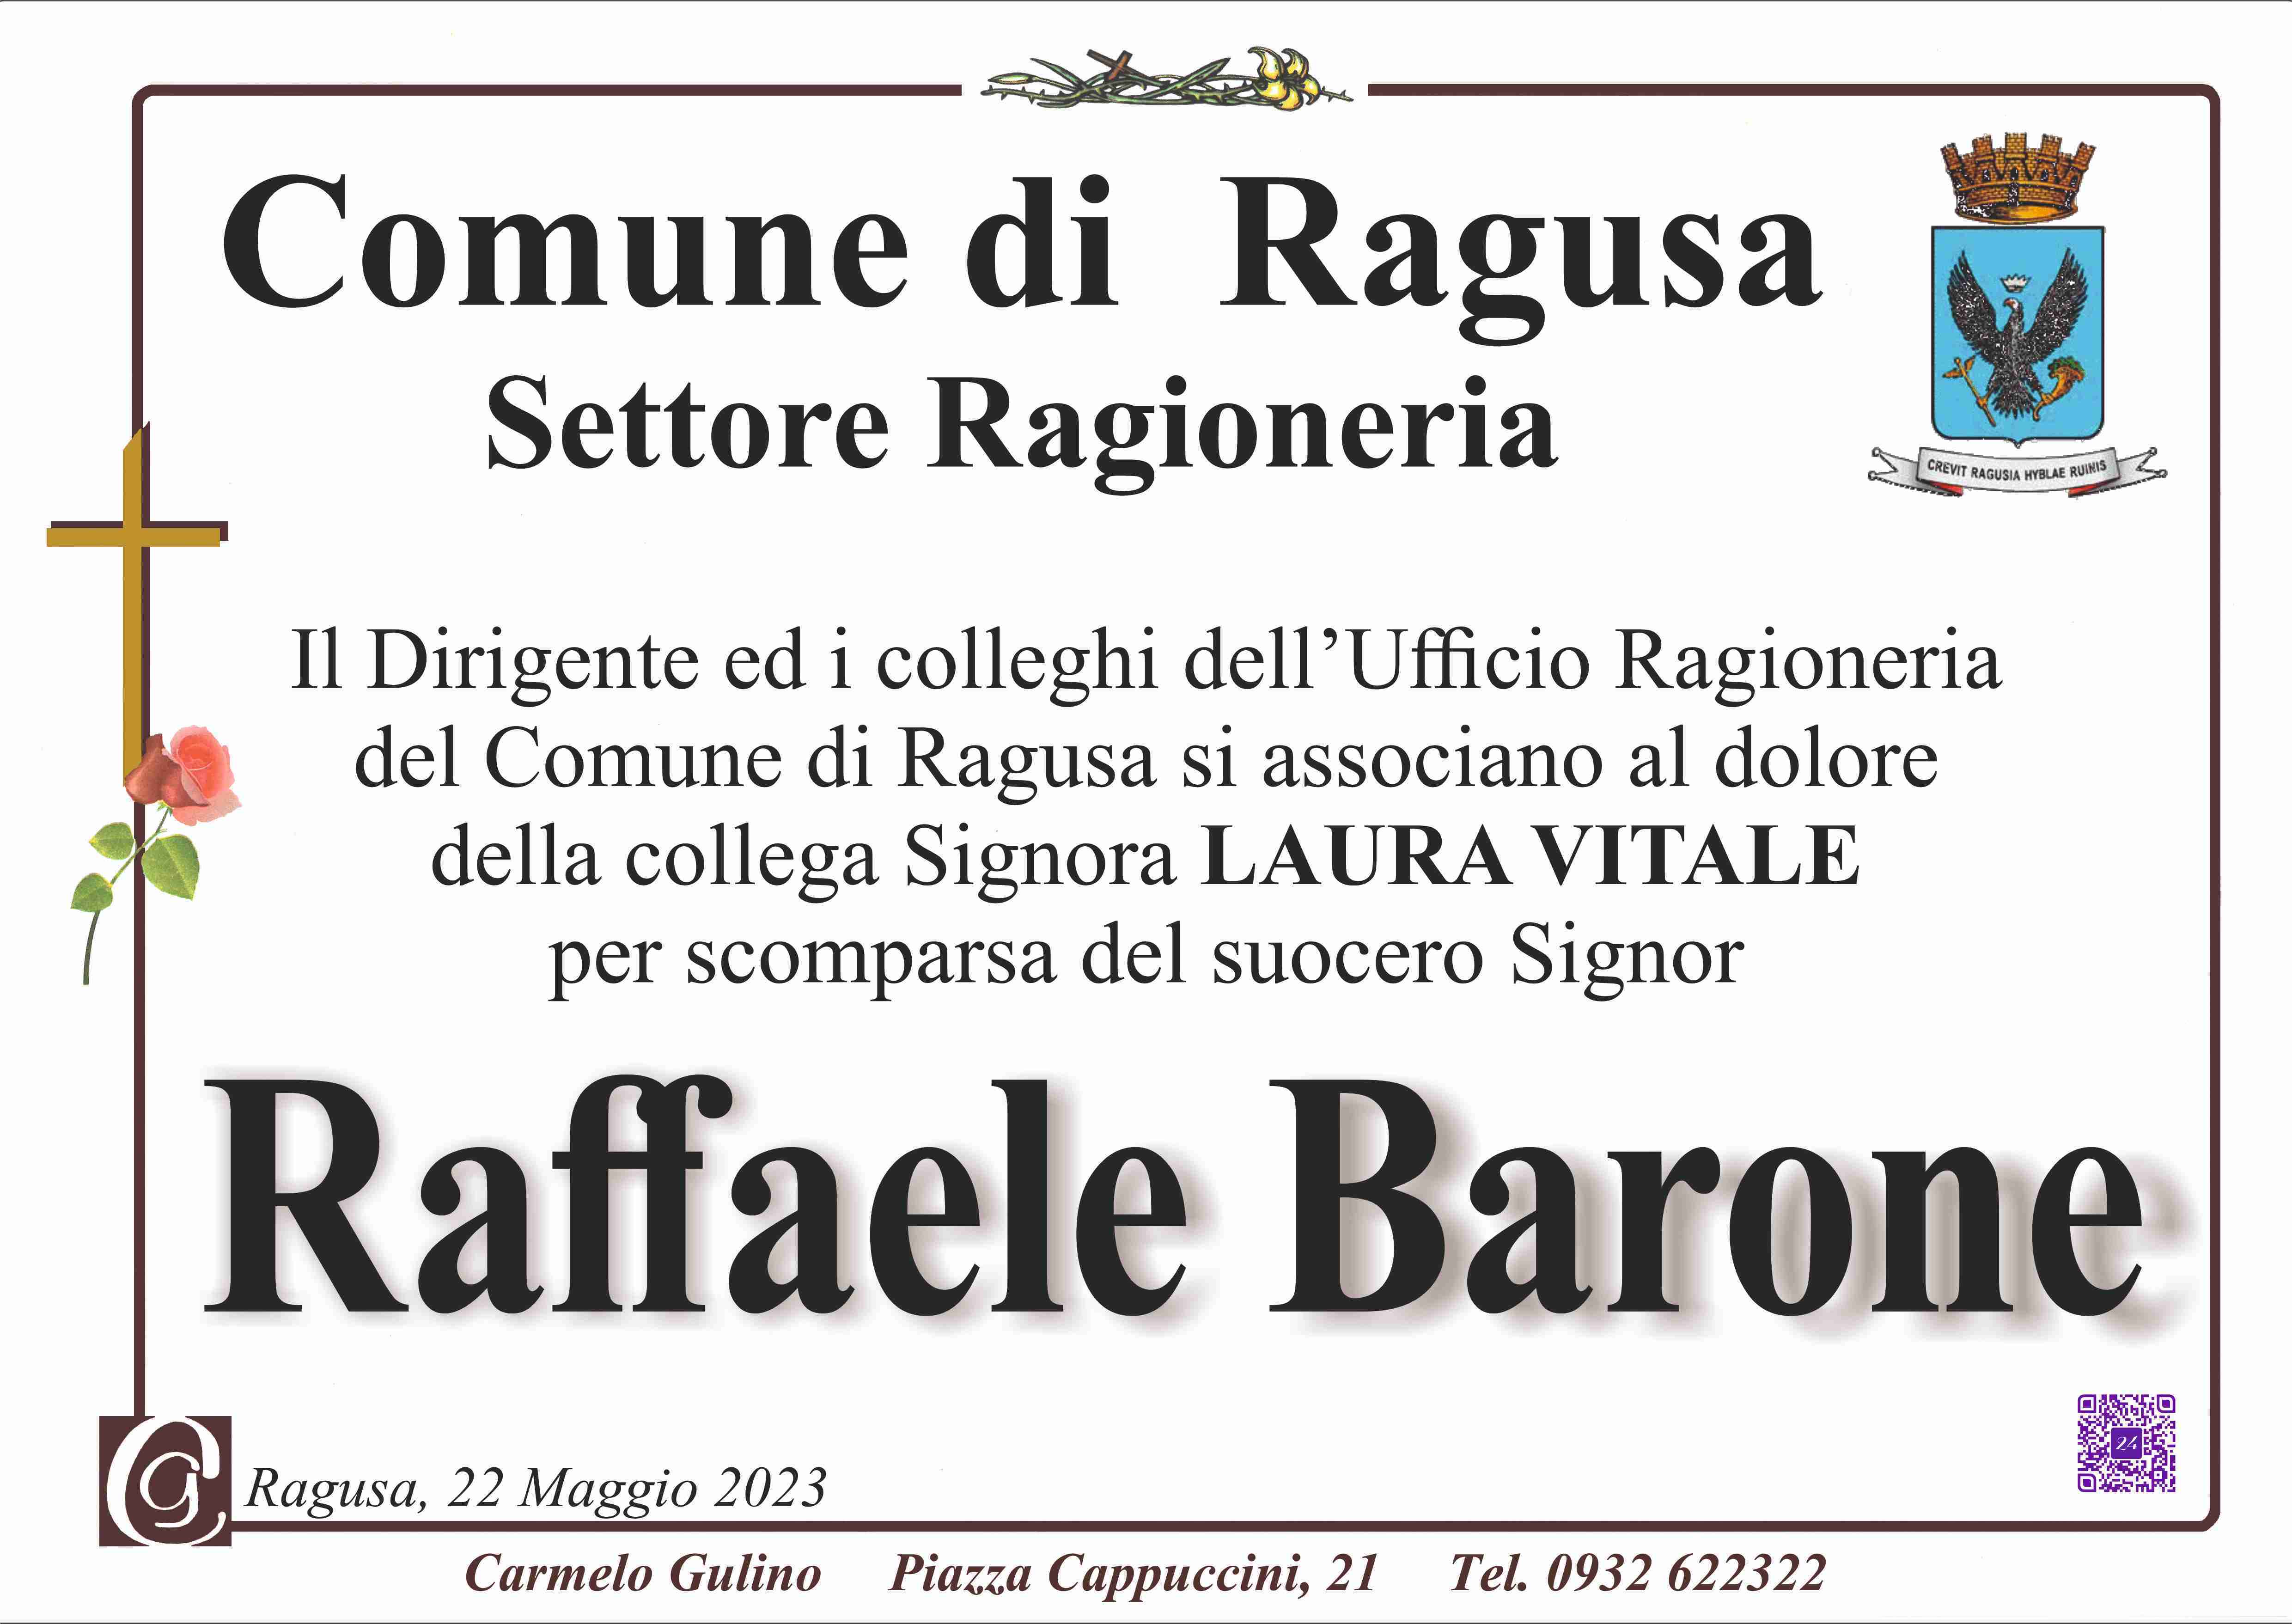 Raffaele Barone